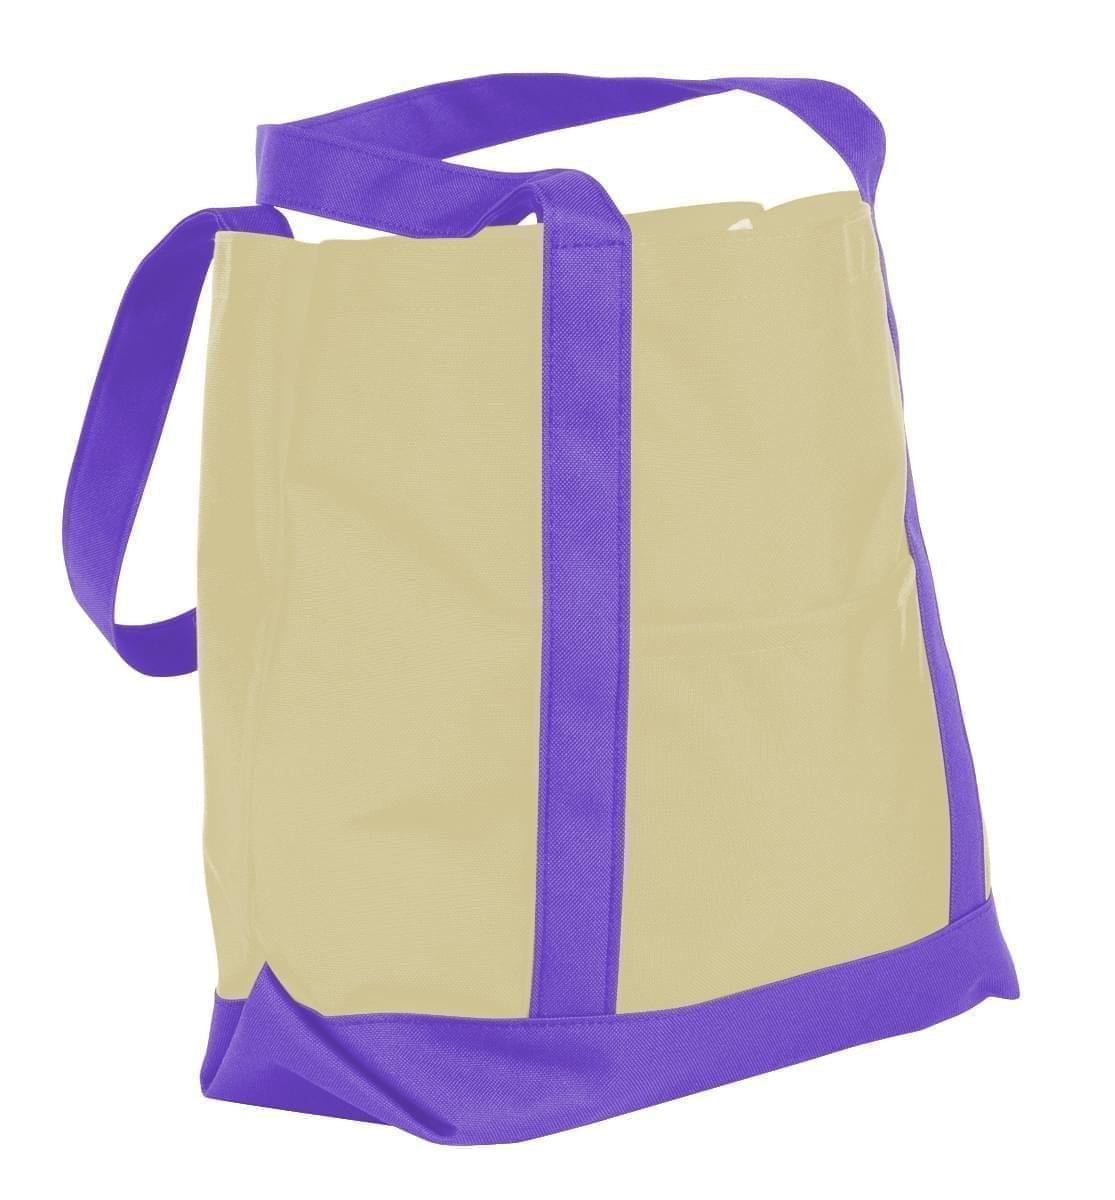 USA Made Canvas Fashion Tote Bags, Natural-Purple, XAACL1UAKK